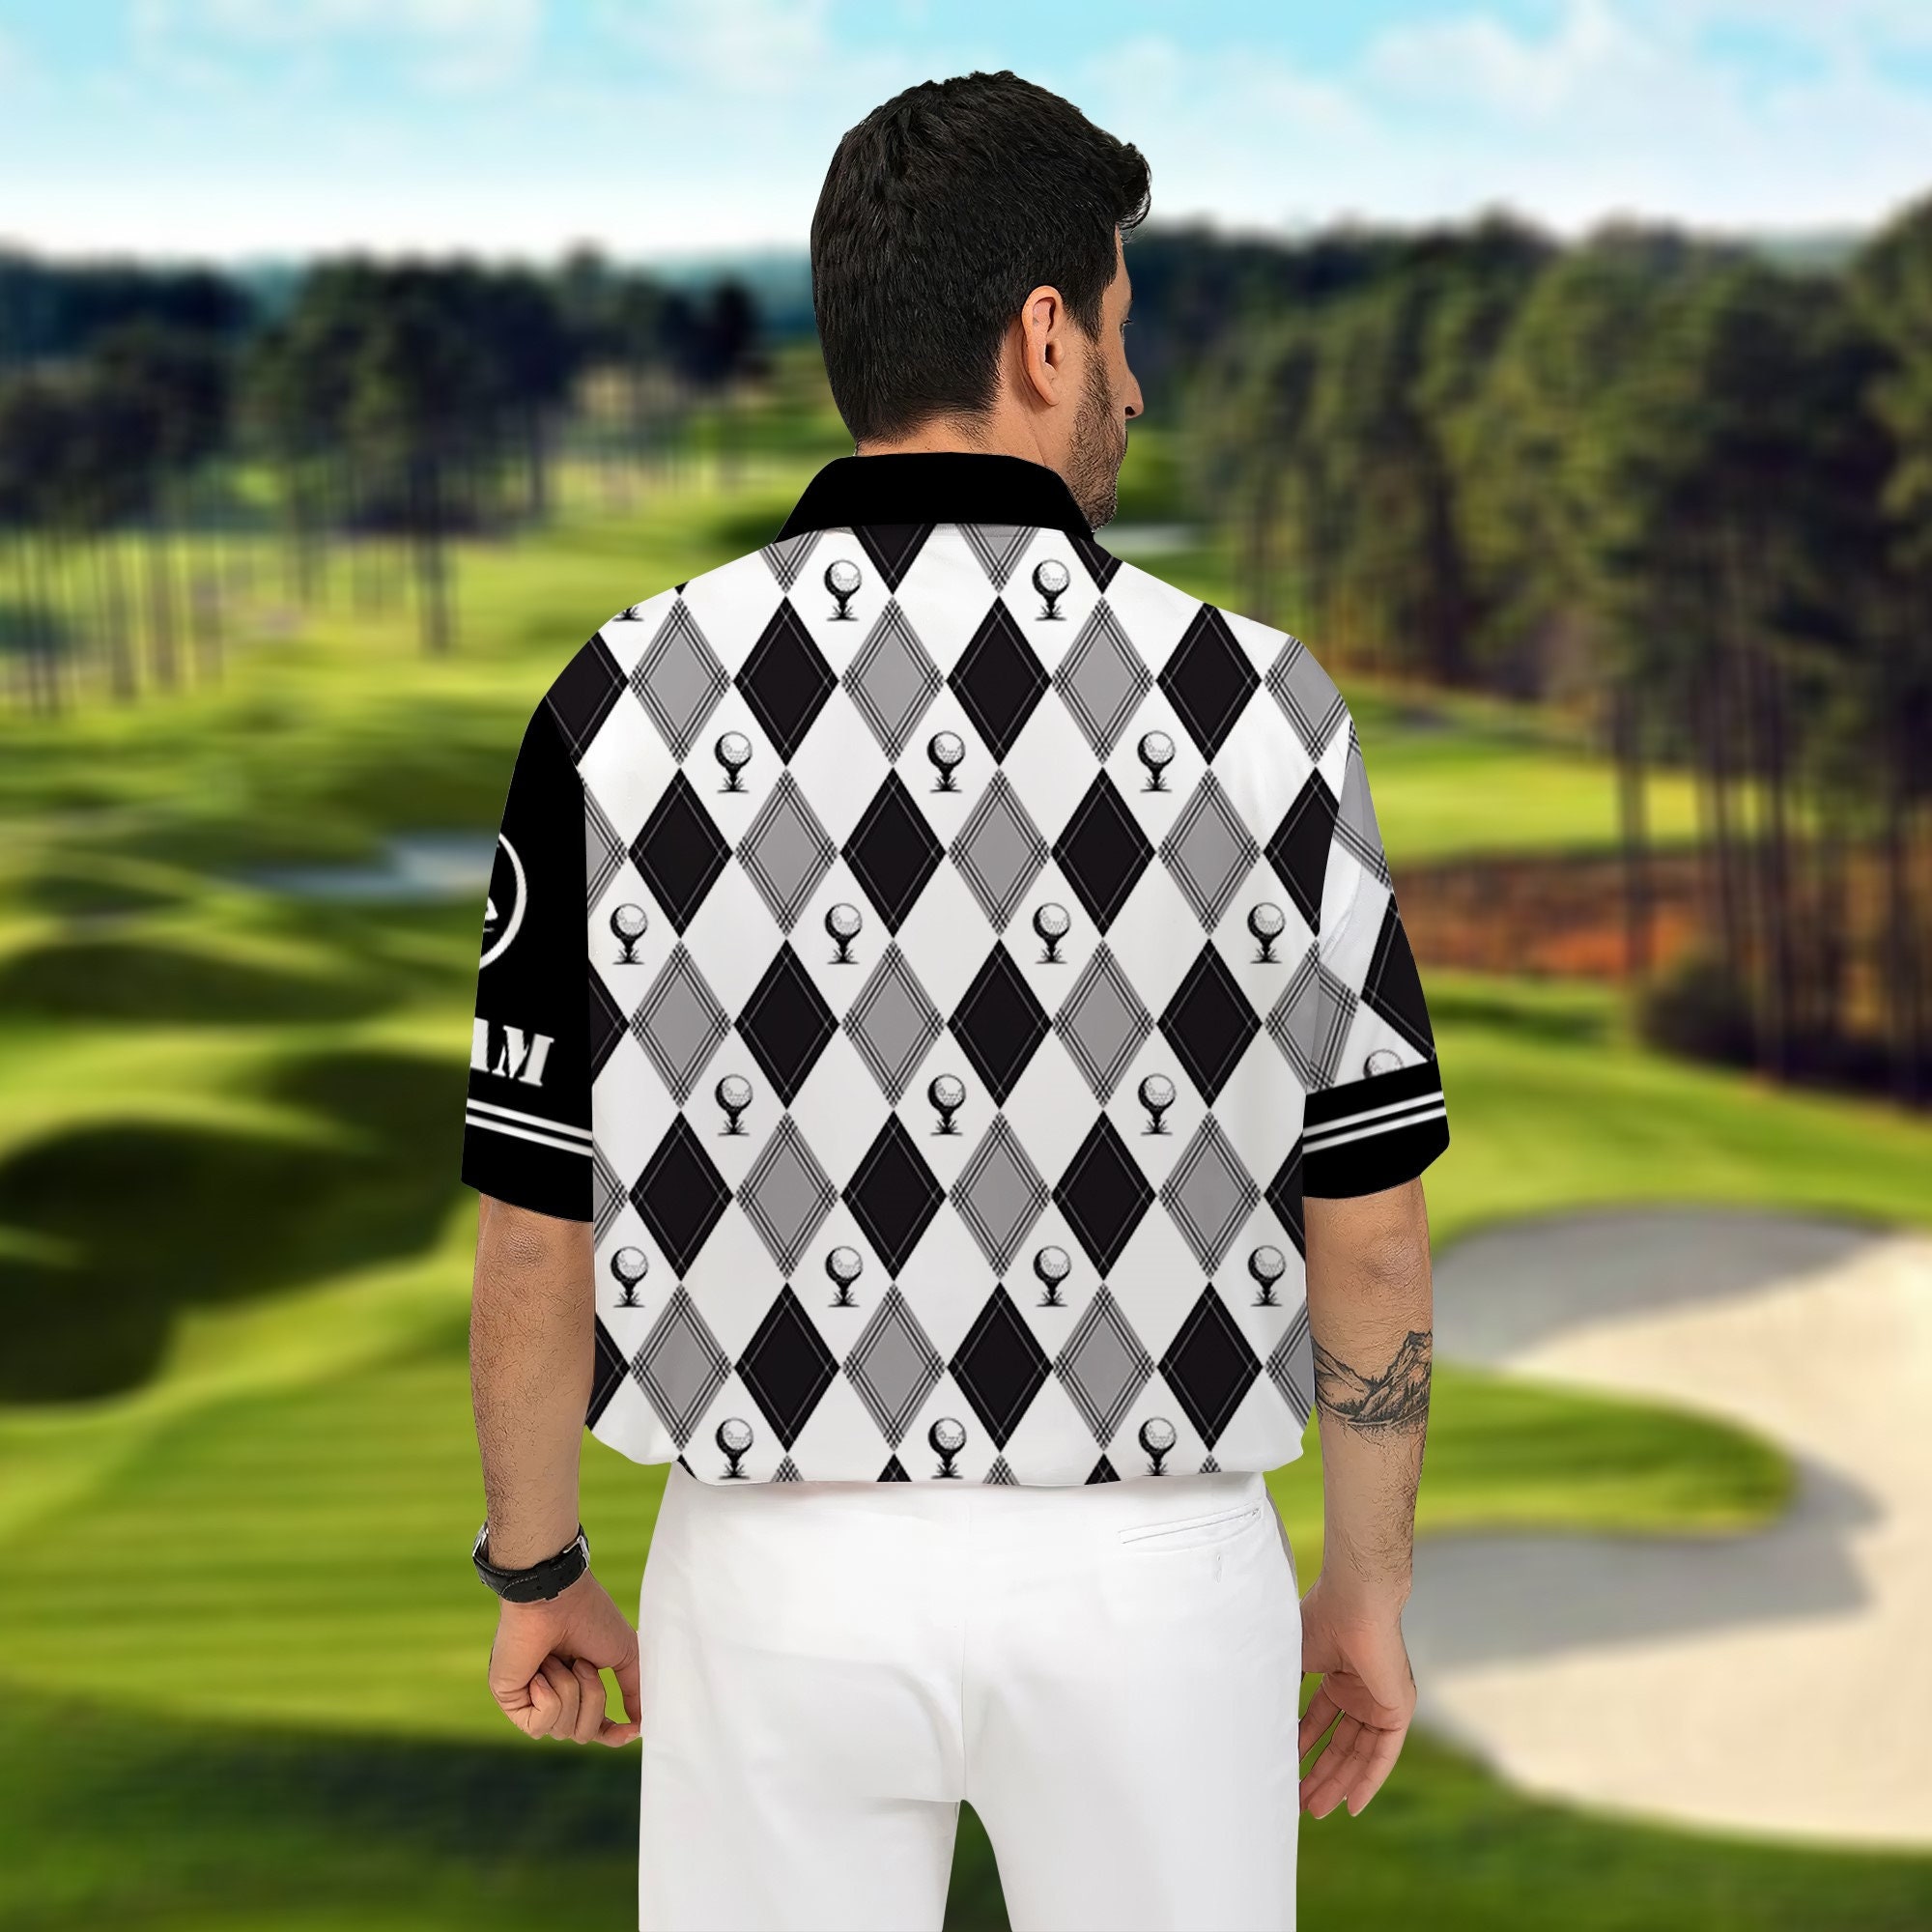 Discover Black And White Argyle Pattern Polo Shirt, Golf Polo Shirt